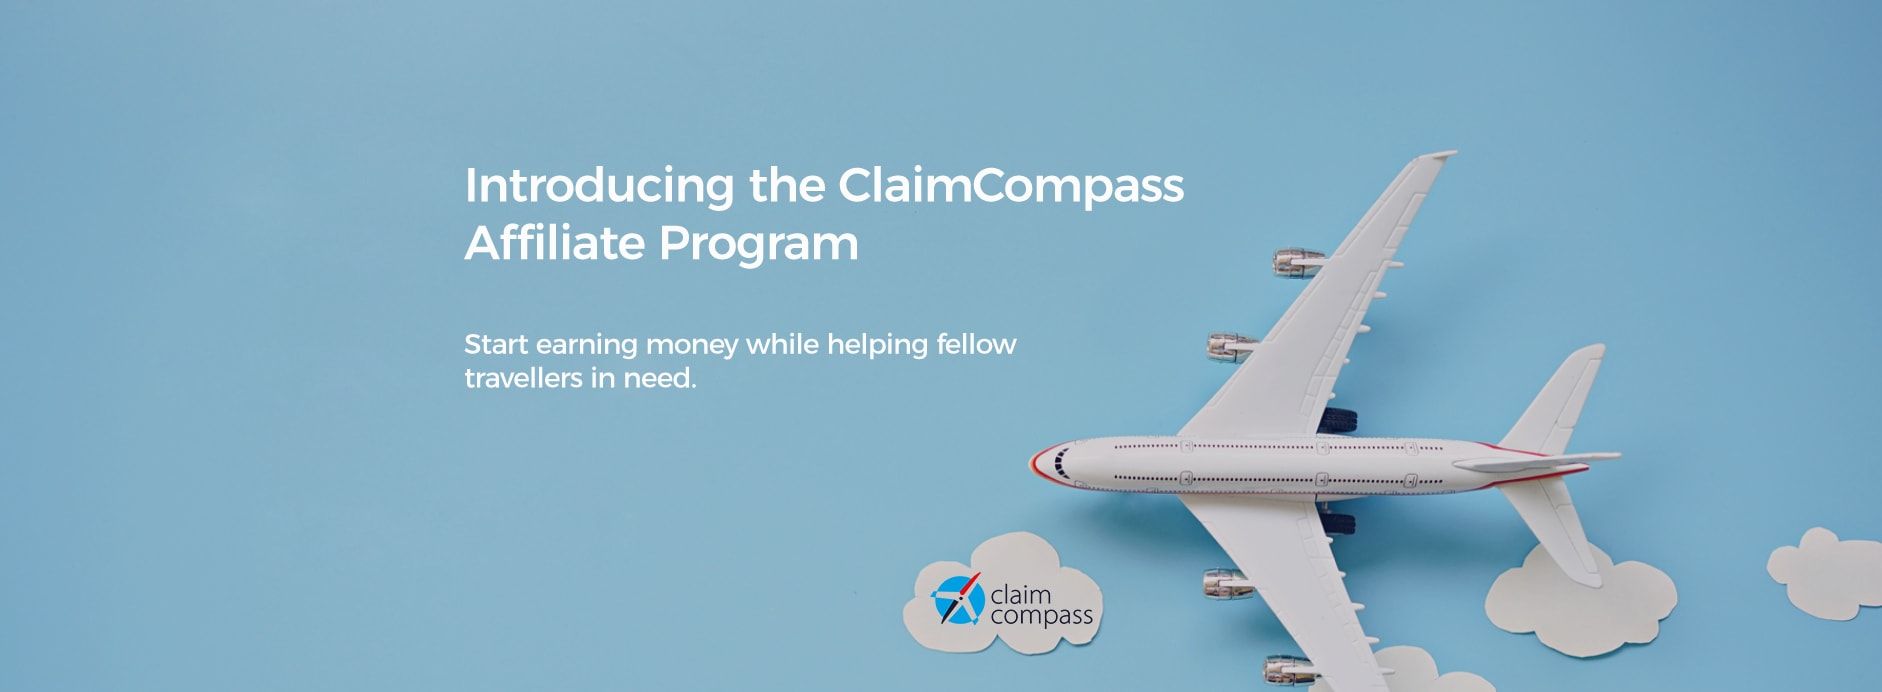 Introducing the ClaimCompass Affiliate Partnership Program